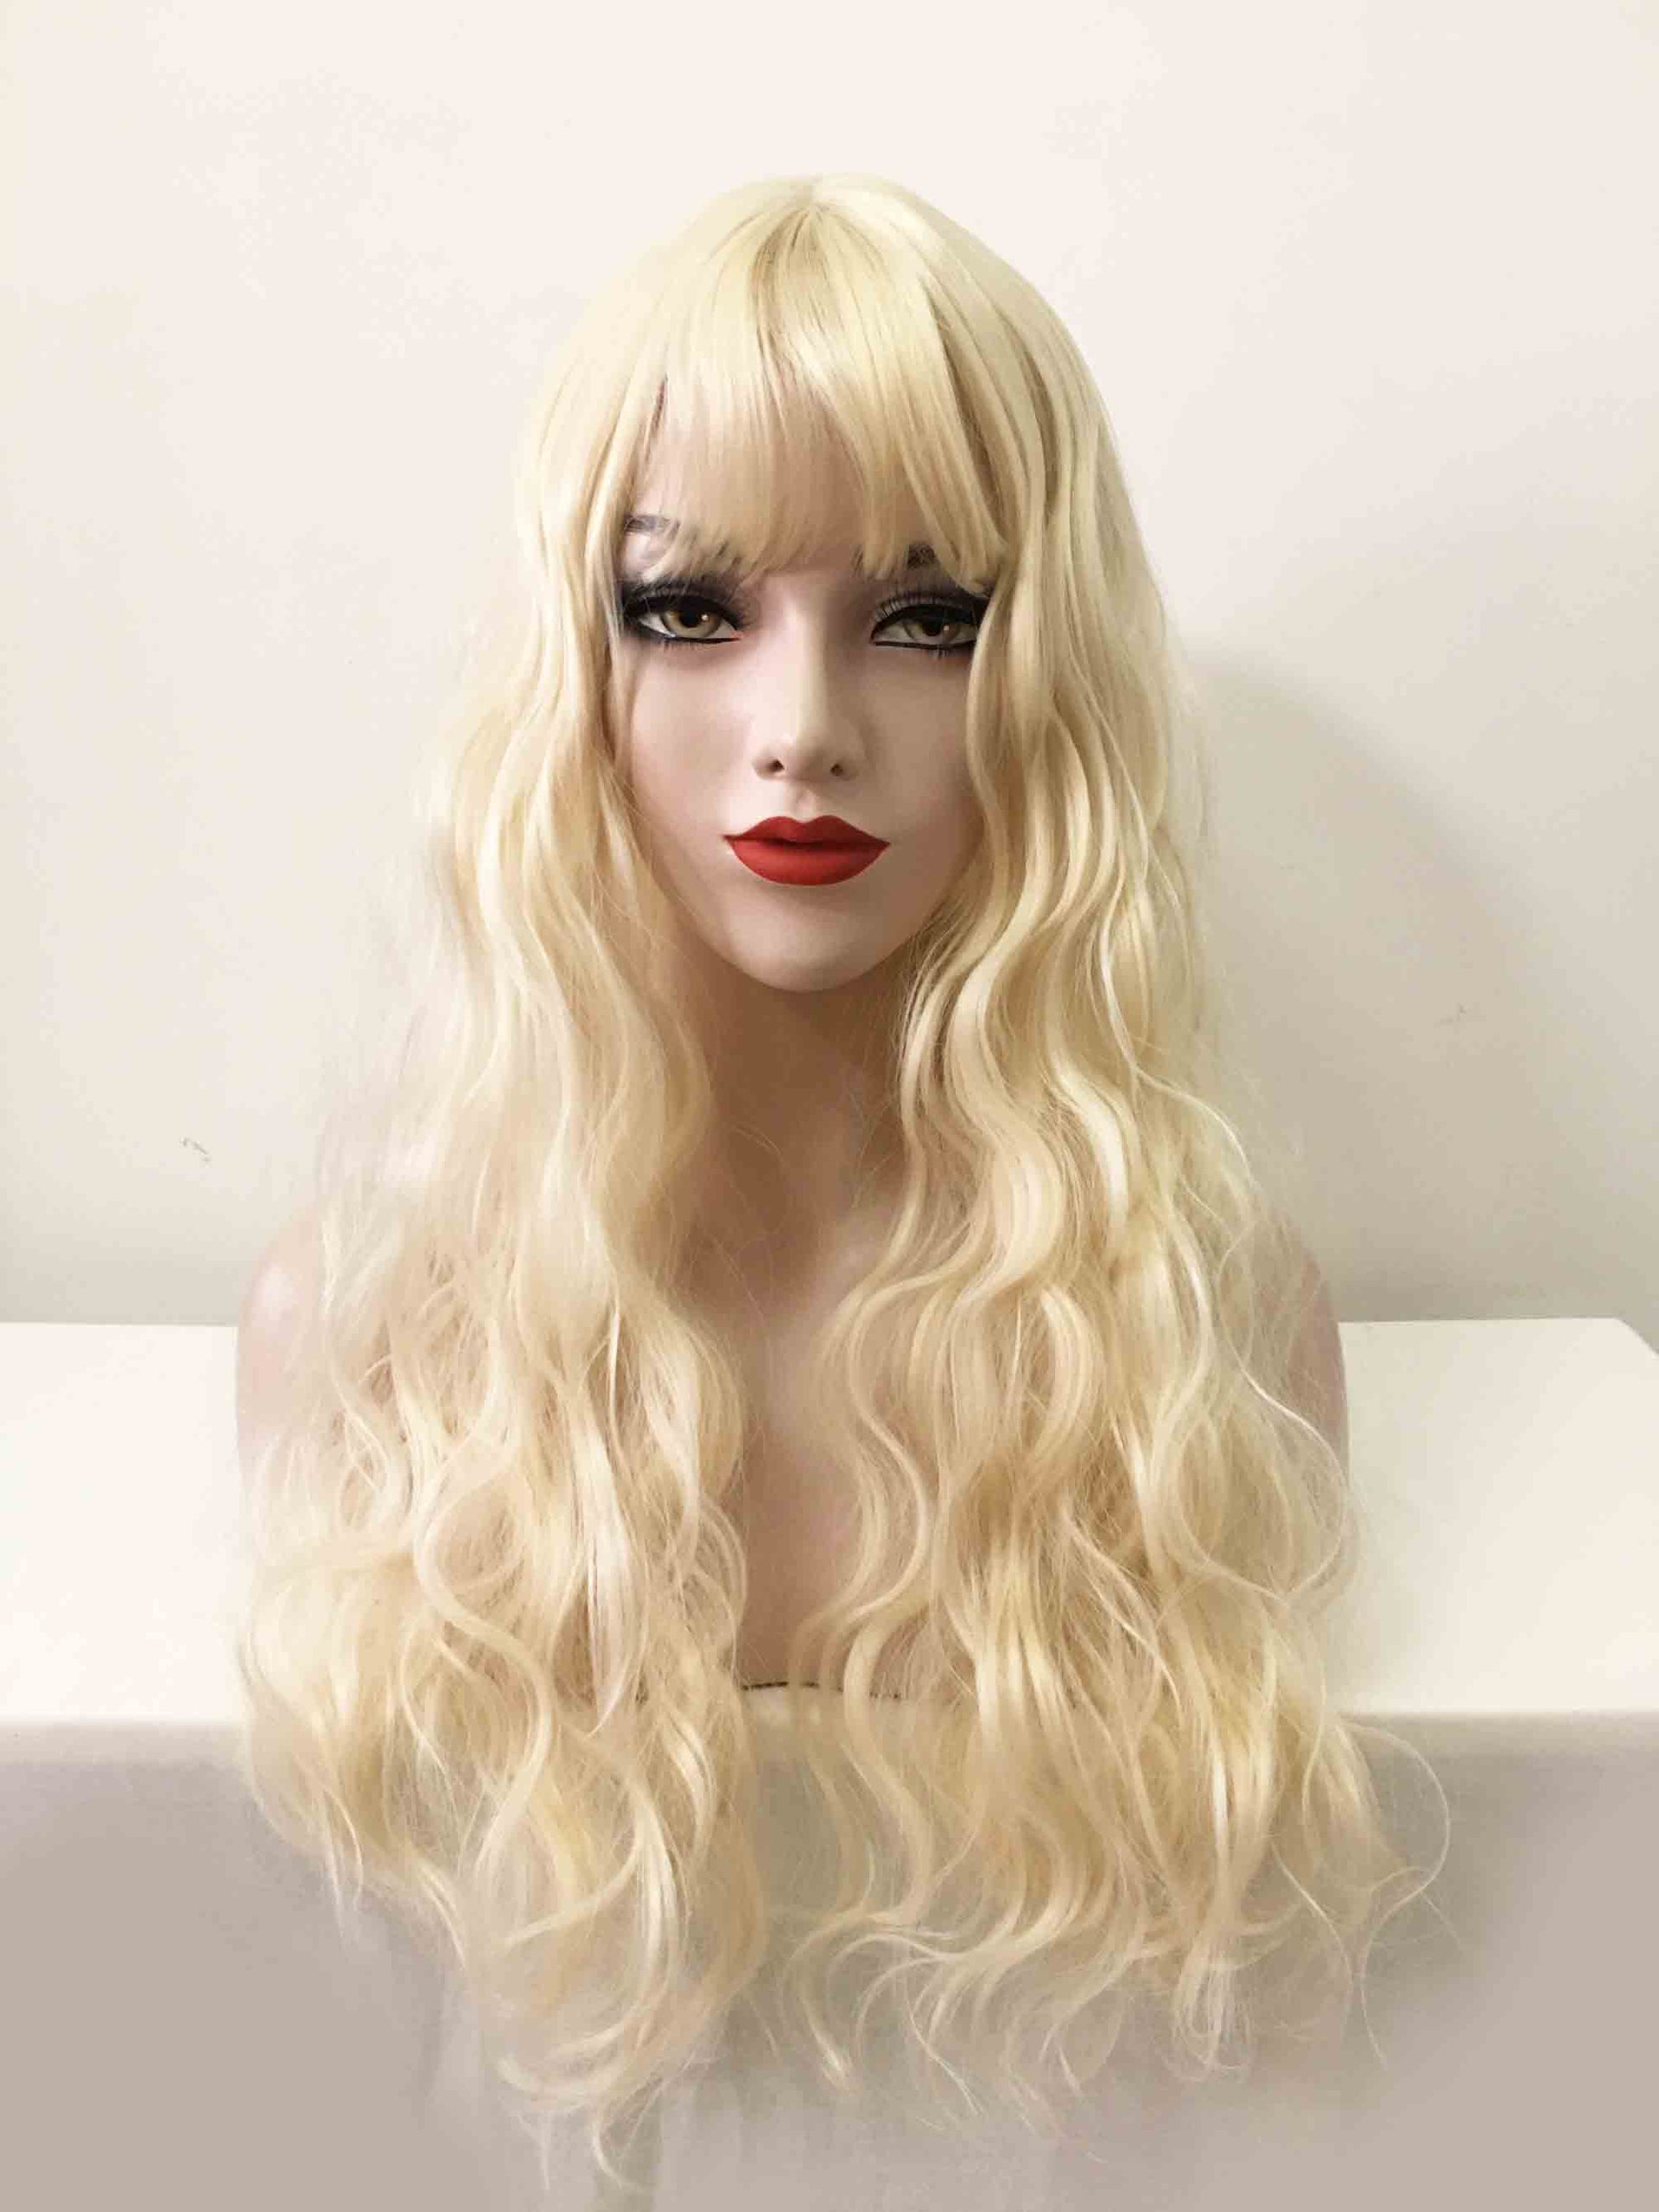 nevermindyrhead Women Blonde Long Curly Fringe Bangs Wig